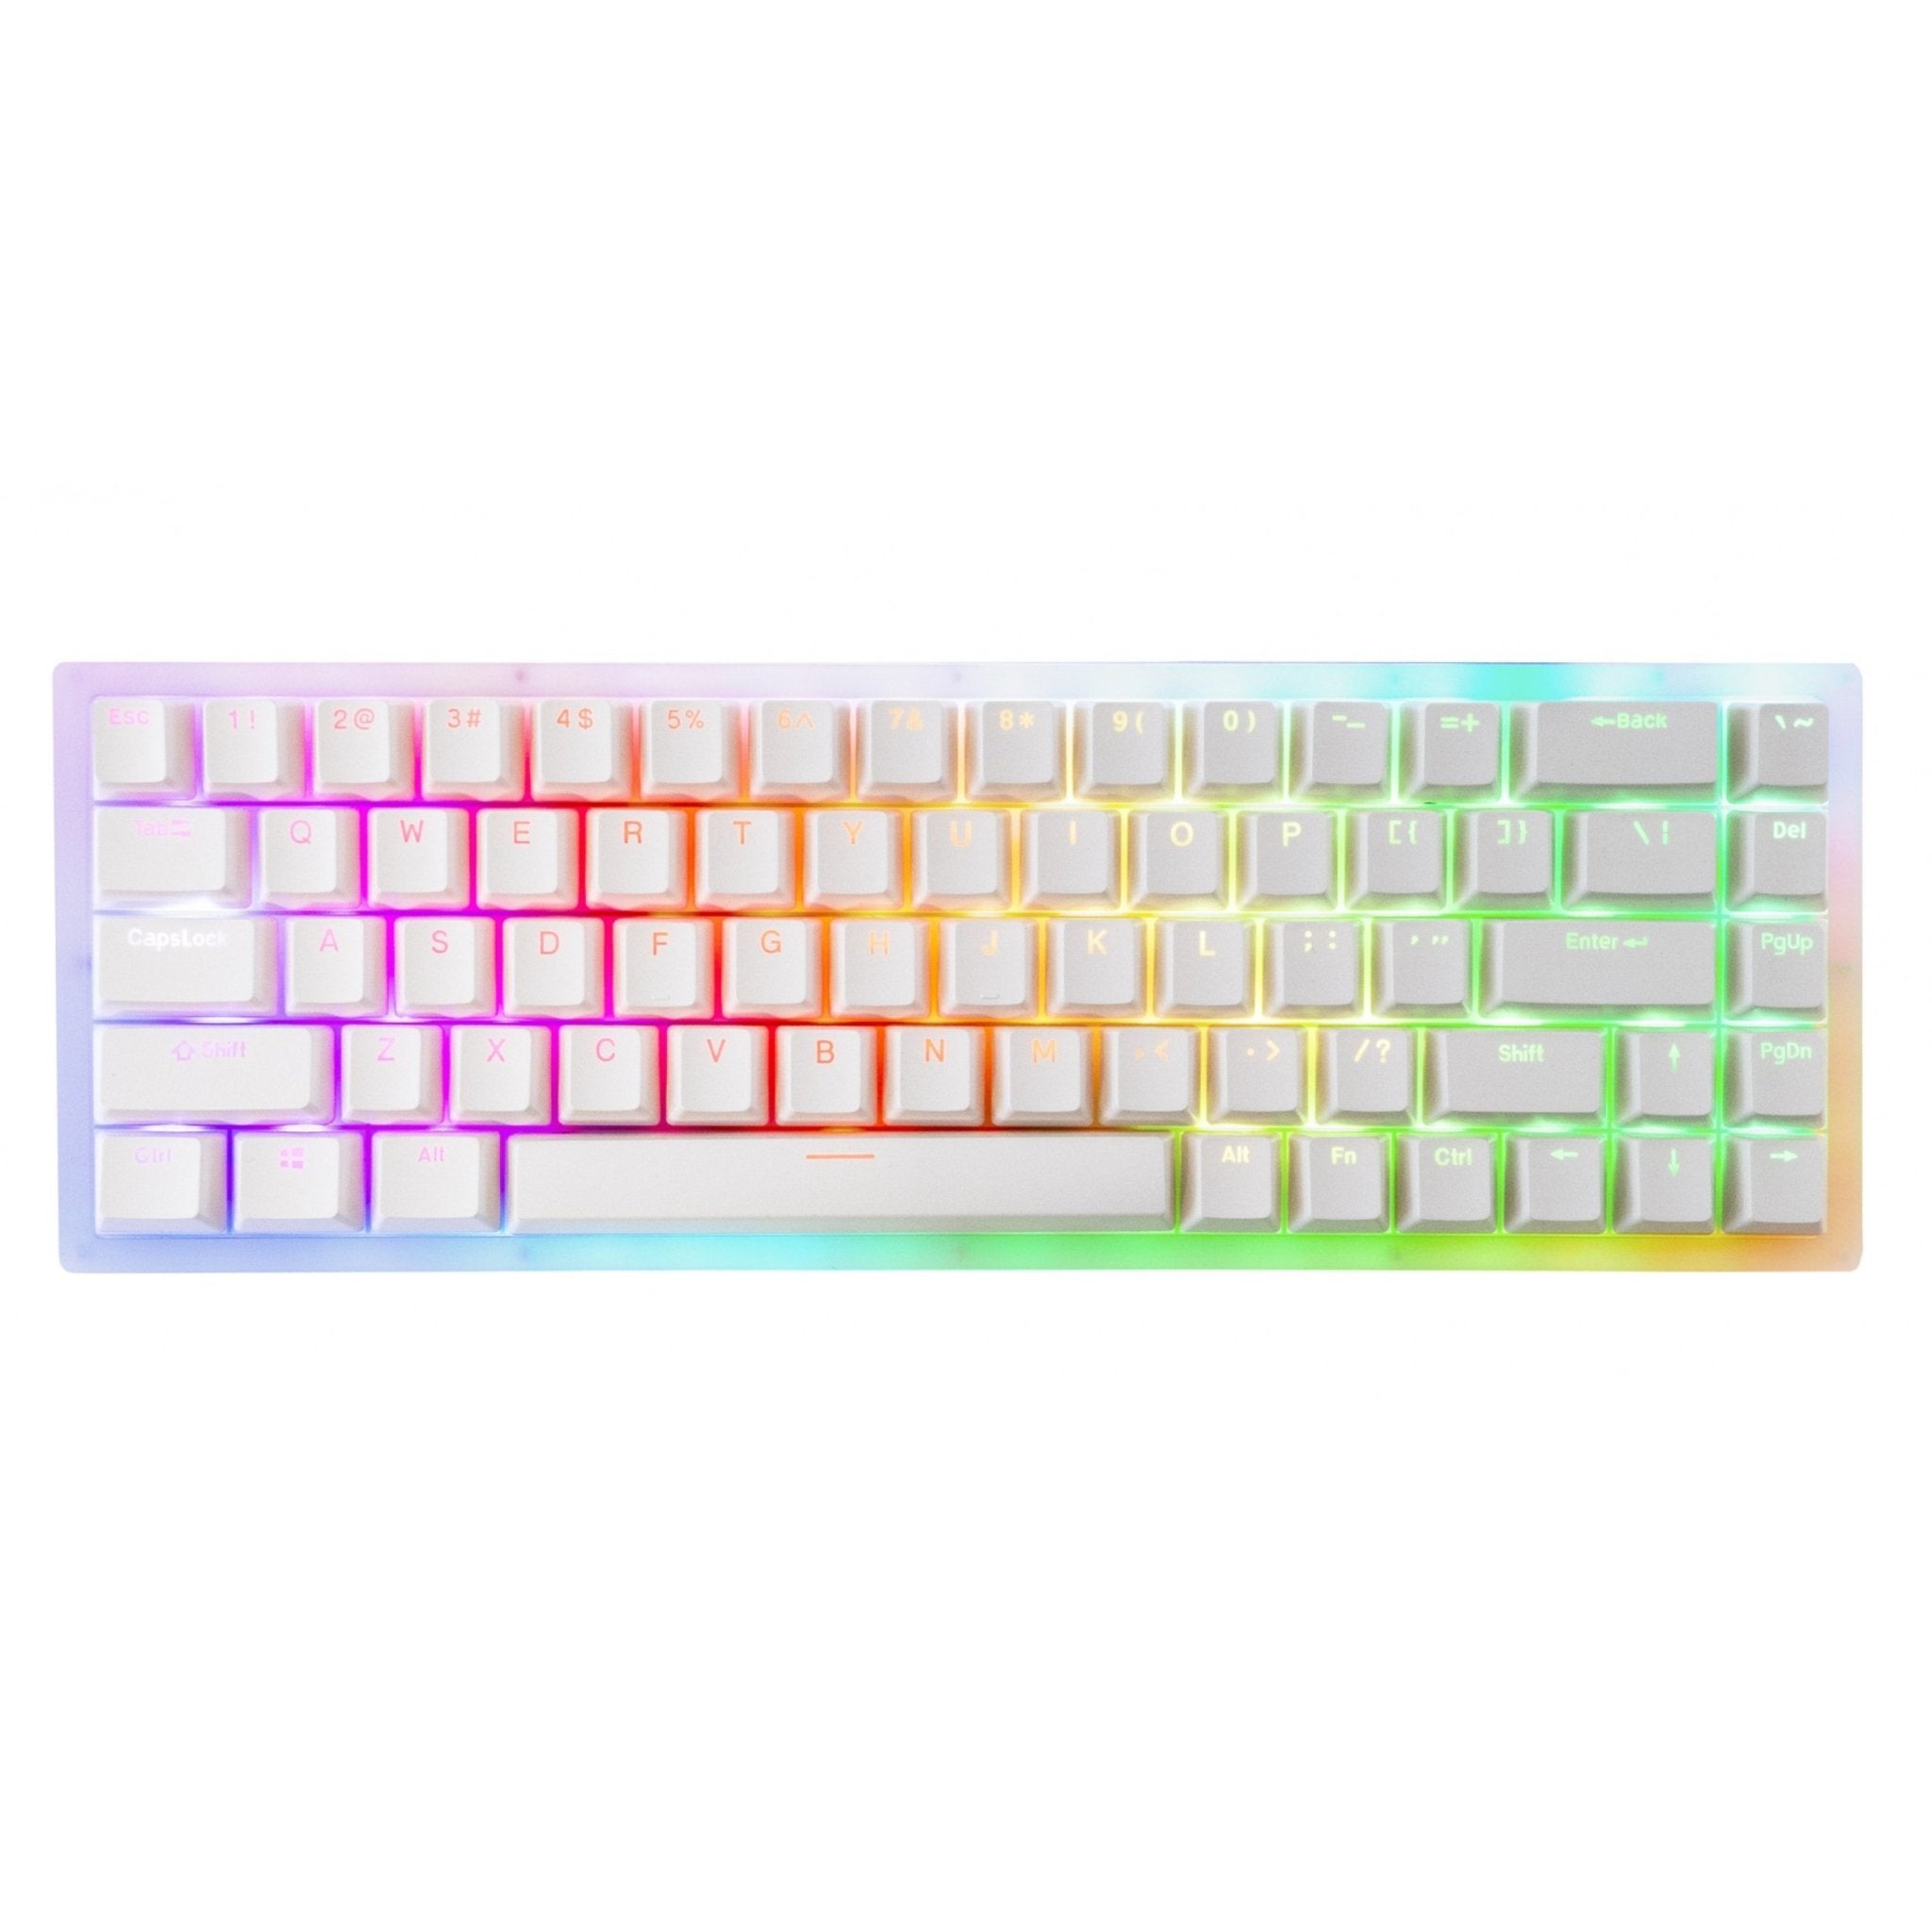 Womier K-68A Mechanical White RGB Keyboard - Brown Switch - Store 974 | ستور ٩٧٤